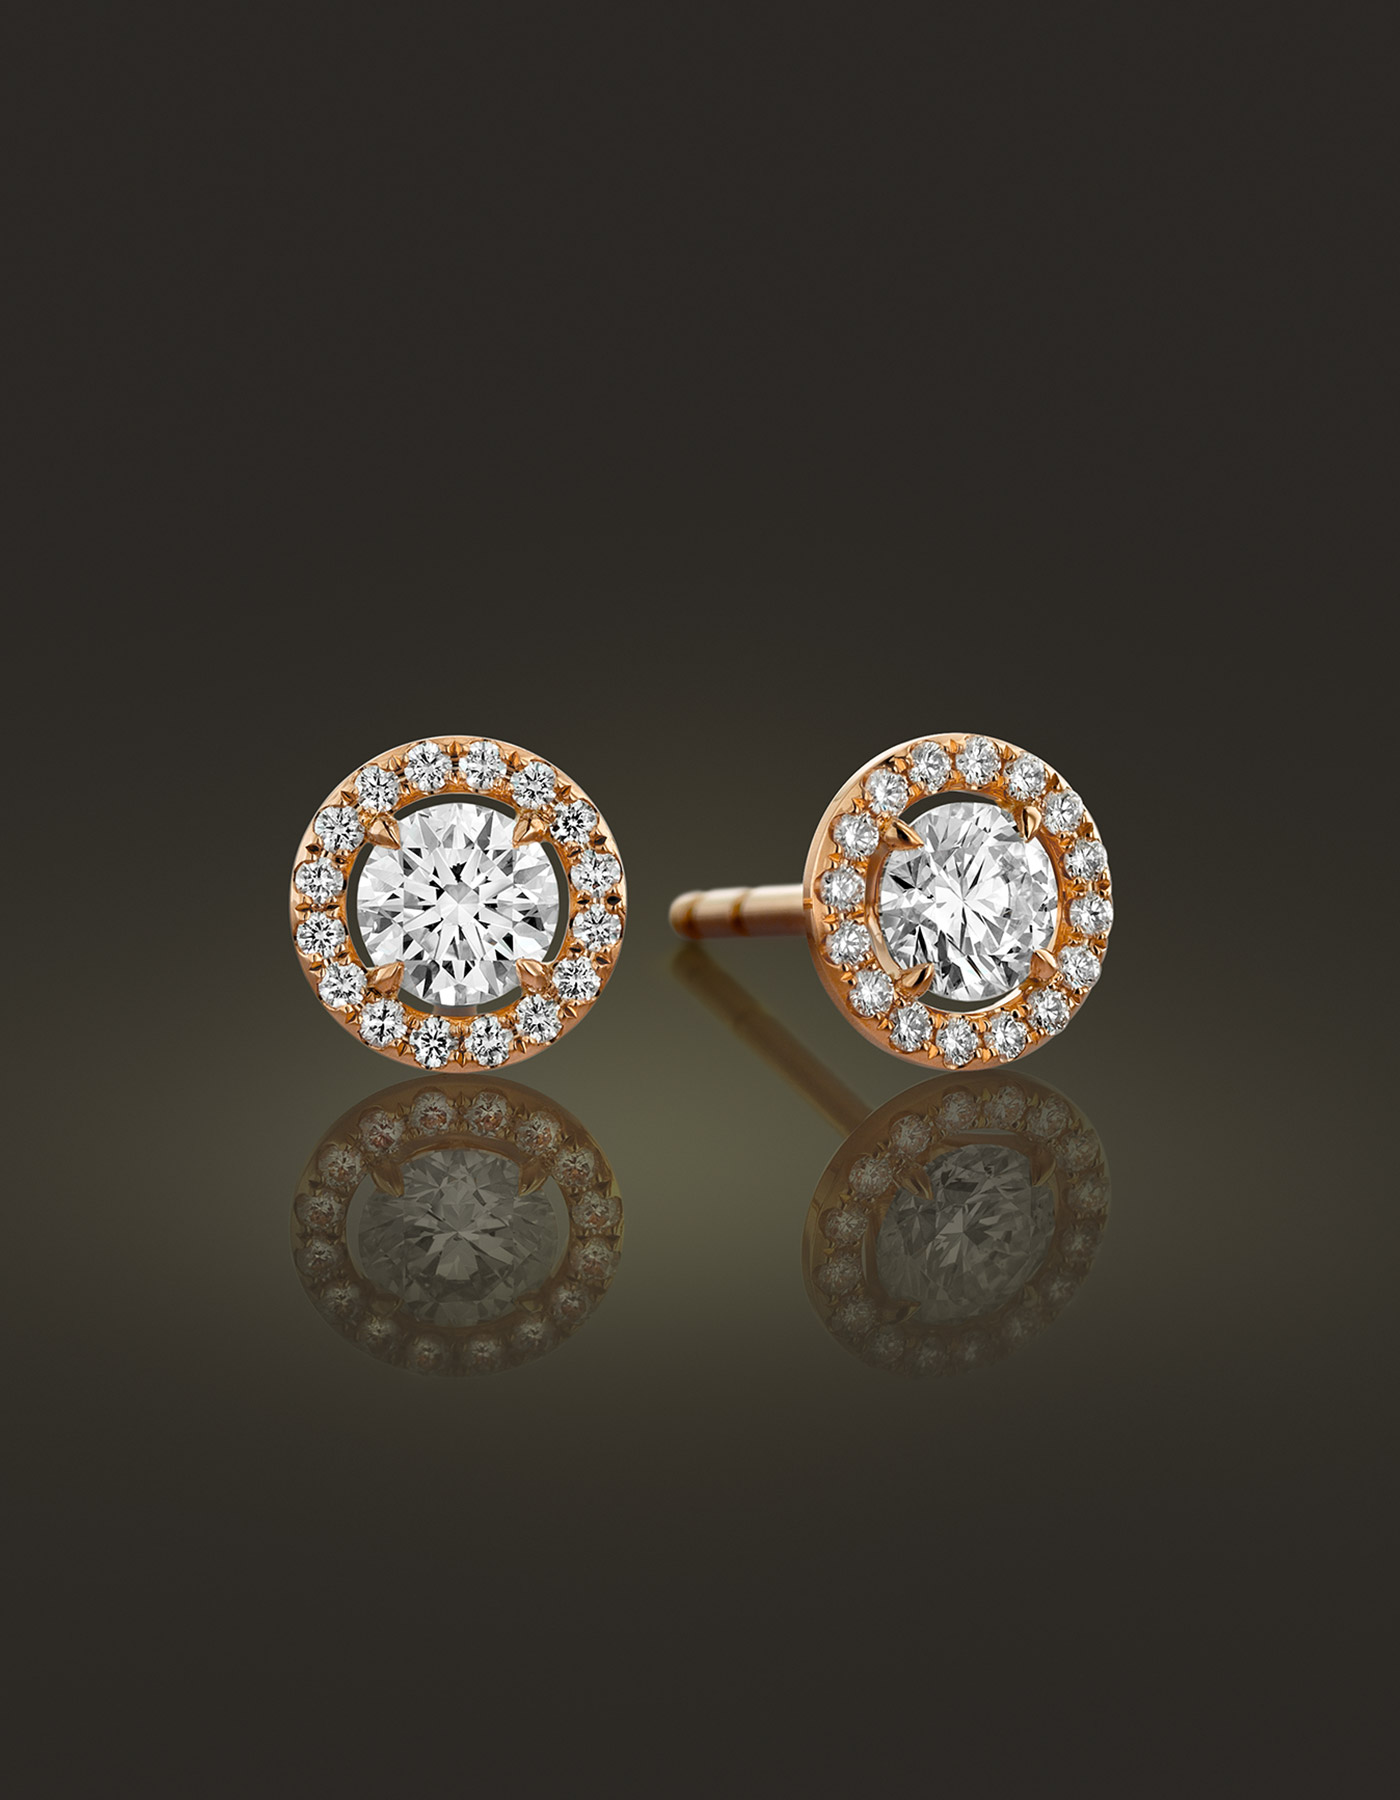 Guinnot Anonymous Halo diamond earrings in 18k rose gold